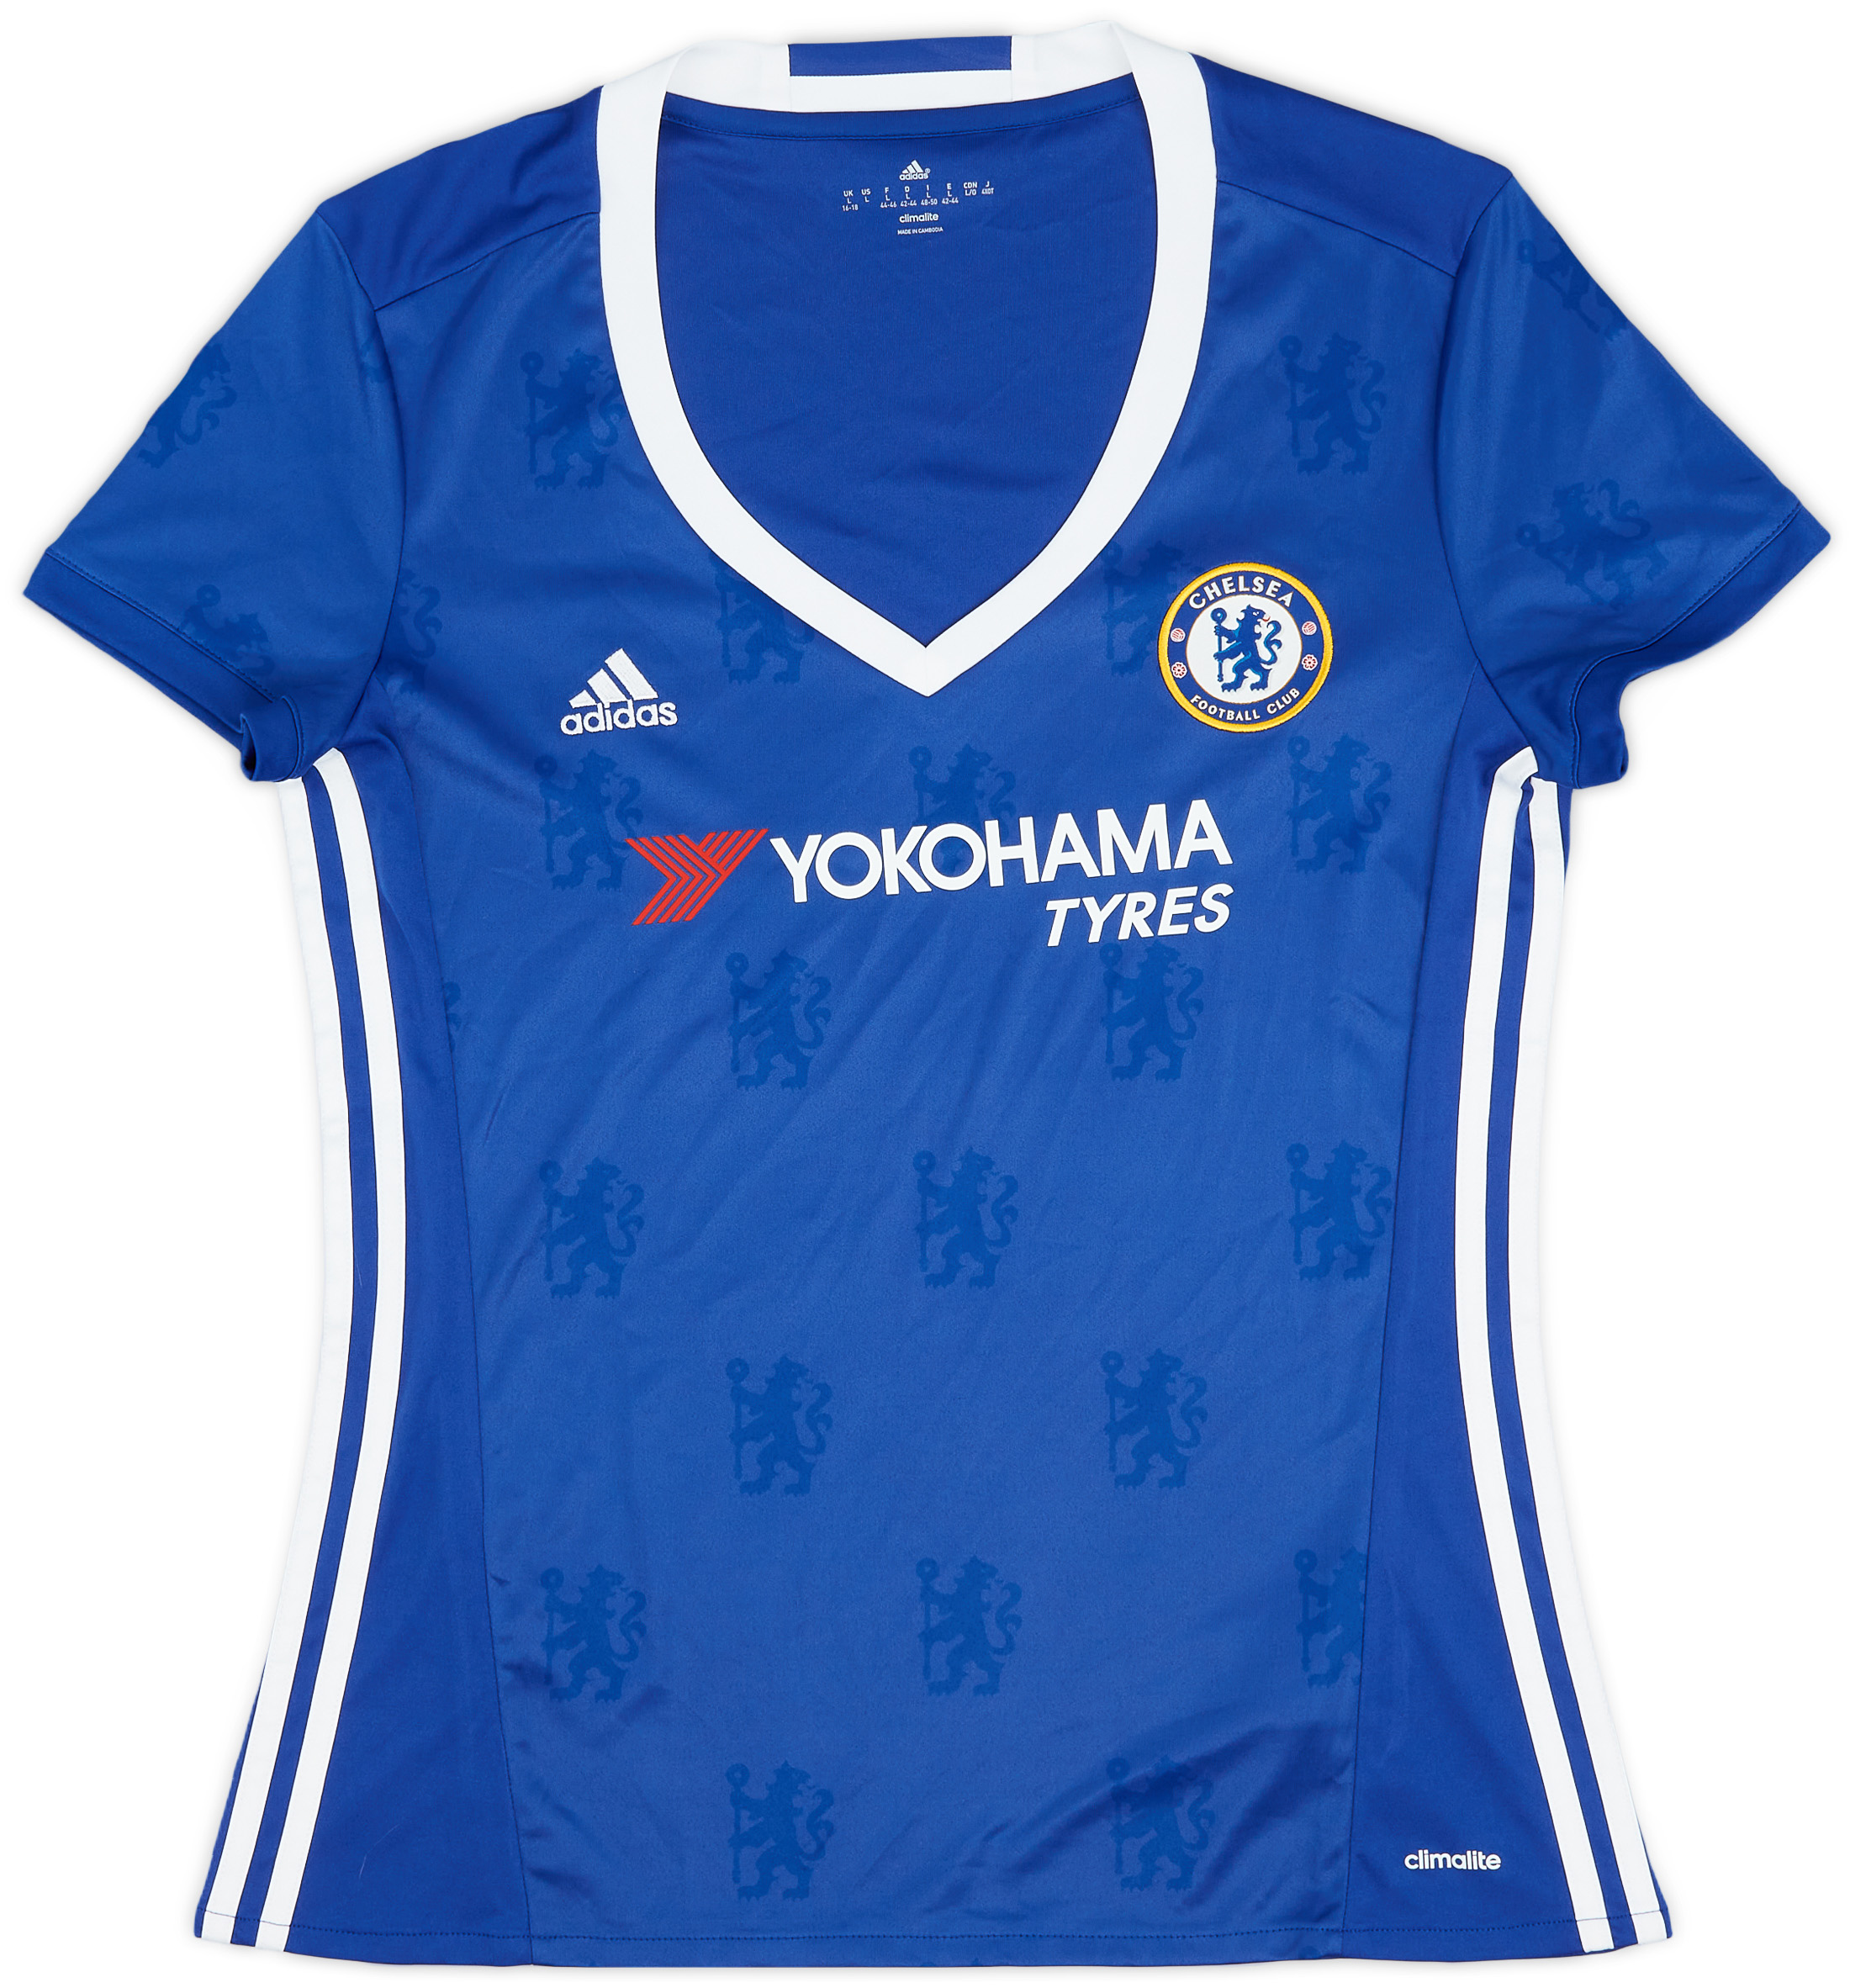 2016-17 Chelsea Home Shirt - 9/10 - (Women's )